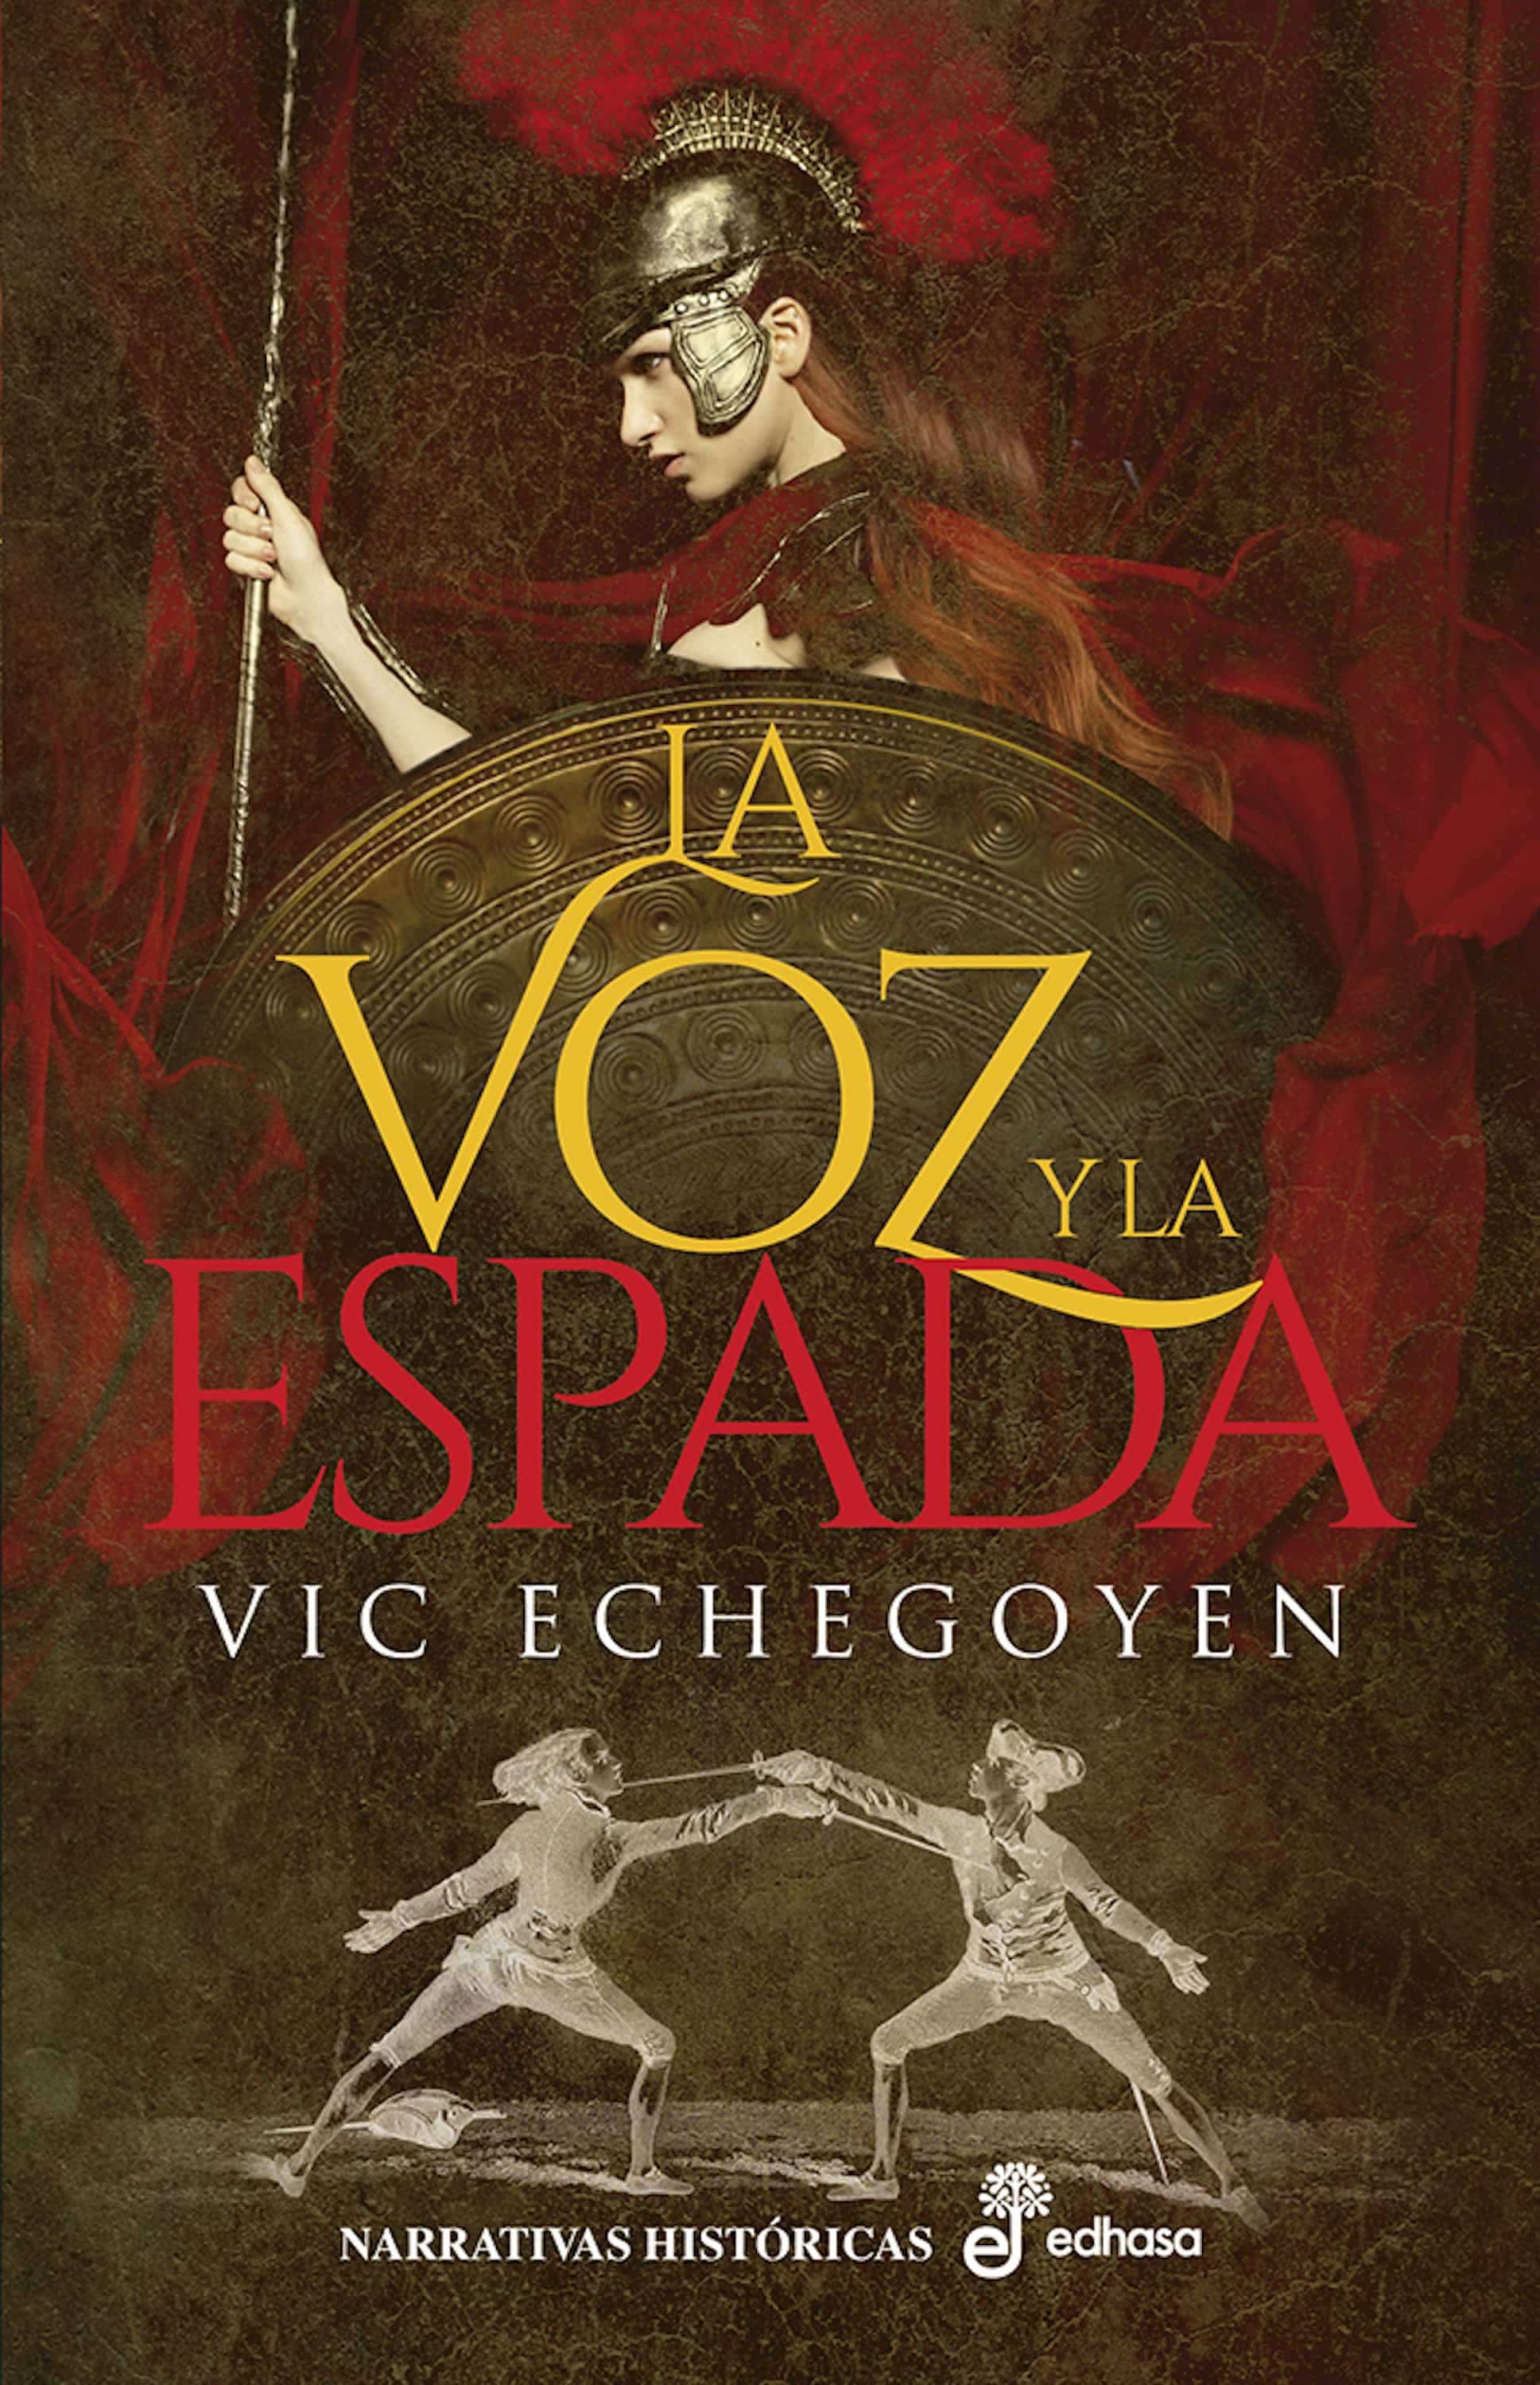 La Voz y la Espada (Vic Echegoyen)